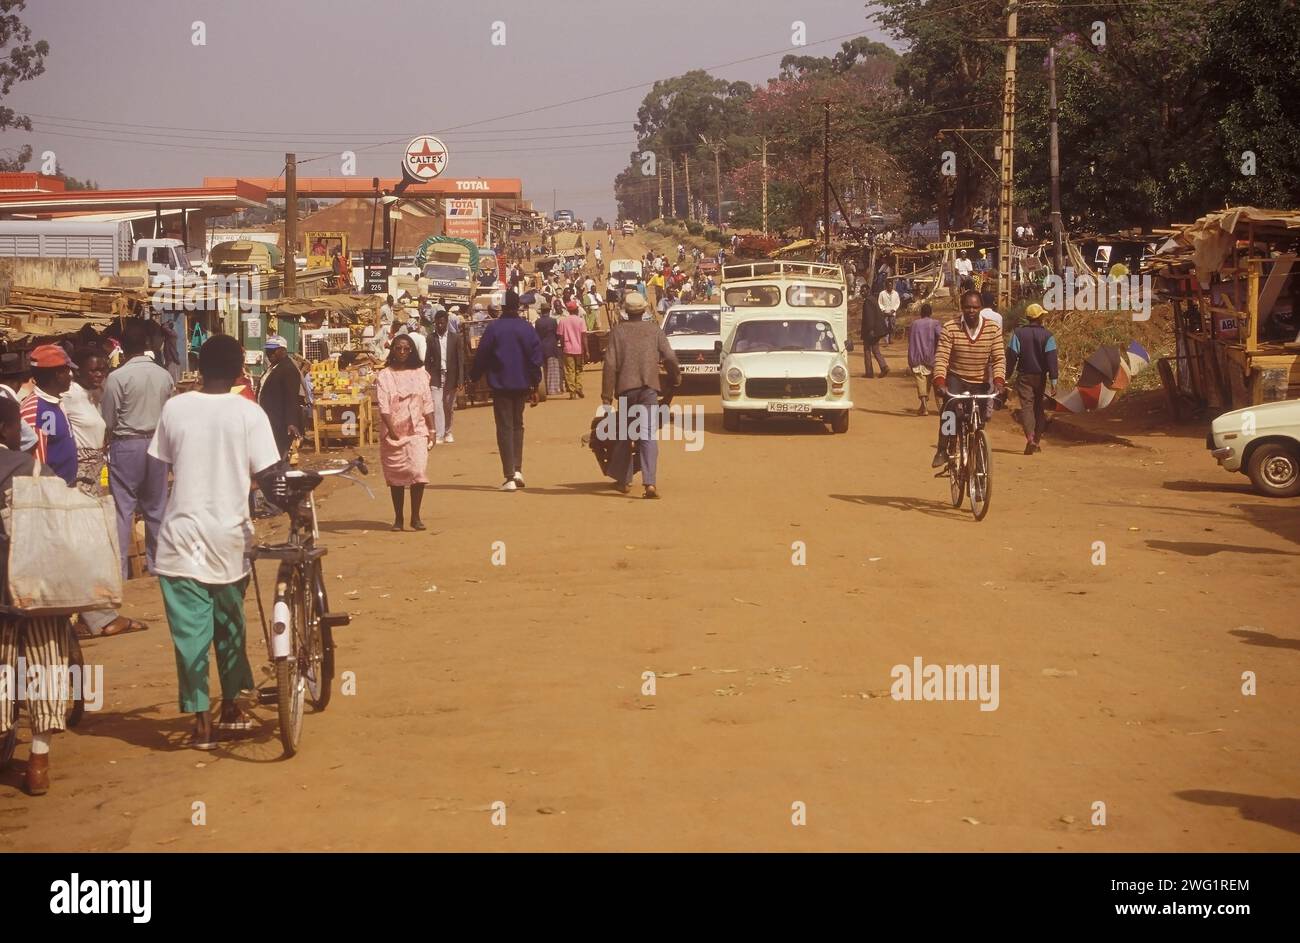 Village street, Kenya Stock Photo